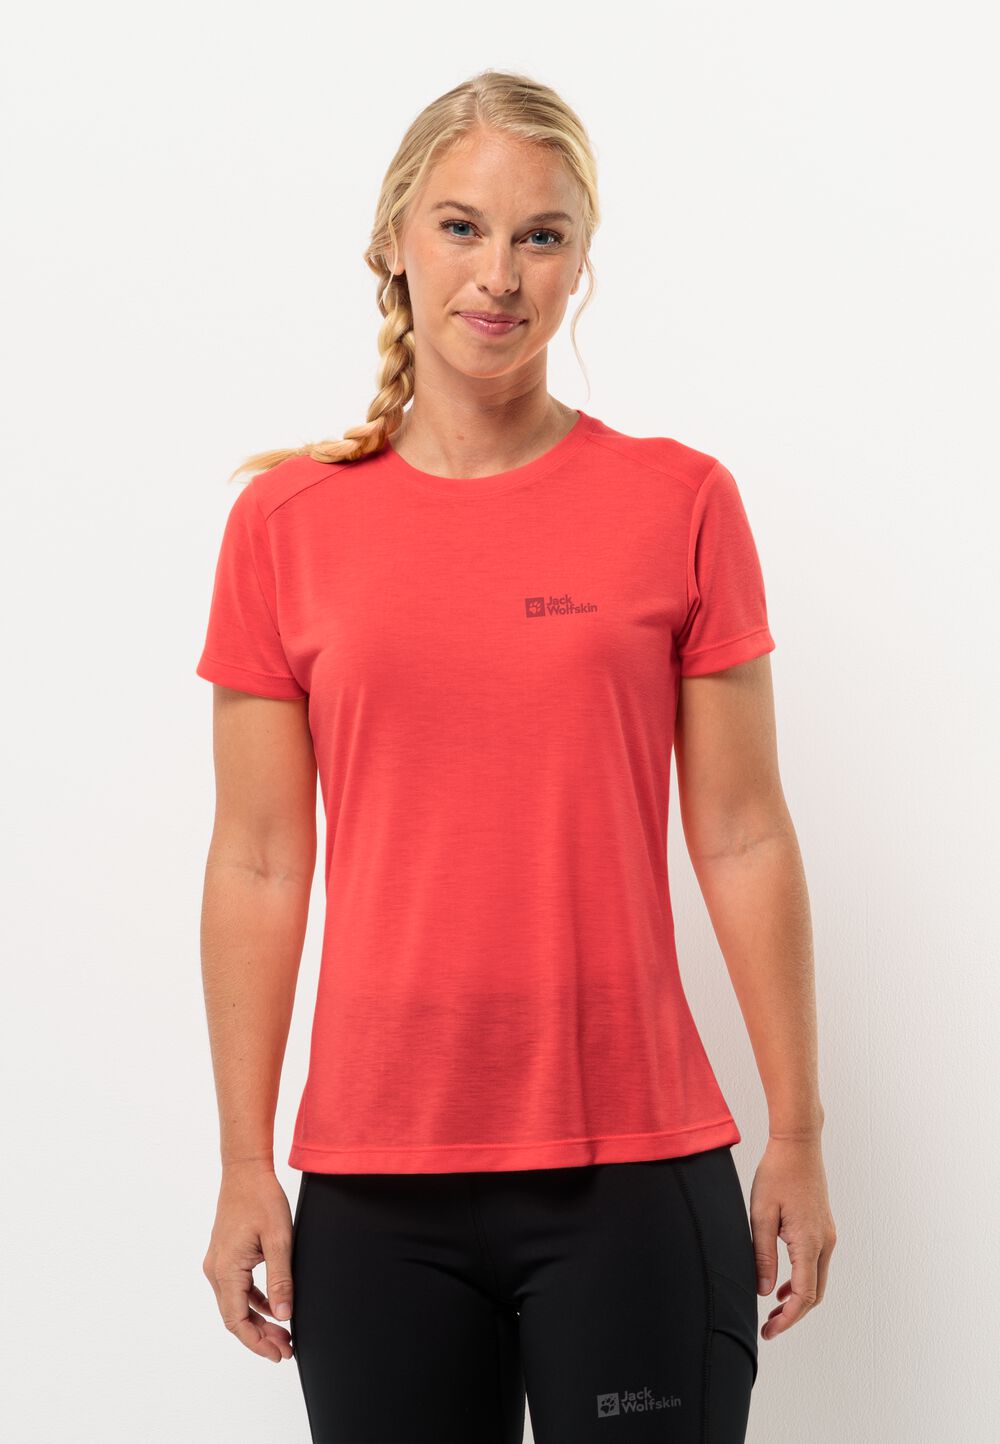 Jack Wolfskin Vonnan S S T-Shirt Women Functioneel shirt Dames L rood vibrant red